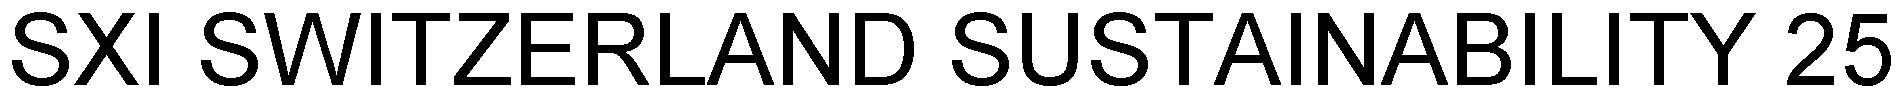 Trademark Logo SXI SWITZERLAND SUSTAINABILITY 25